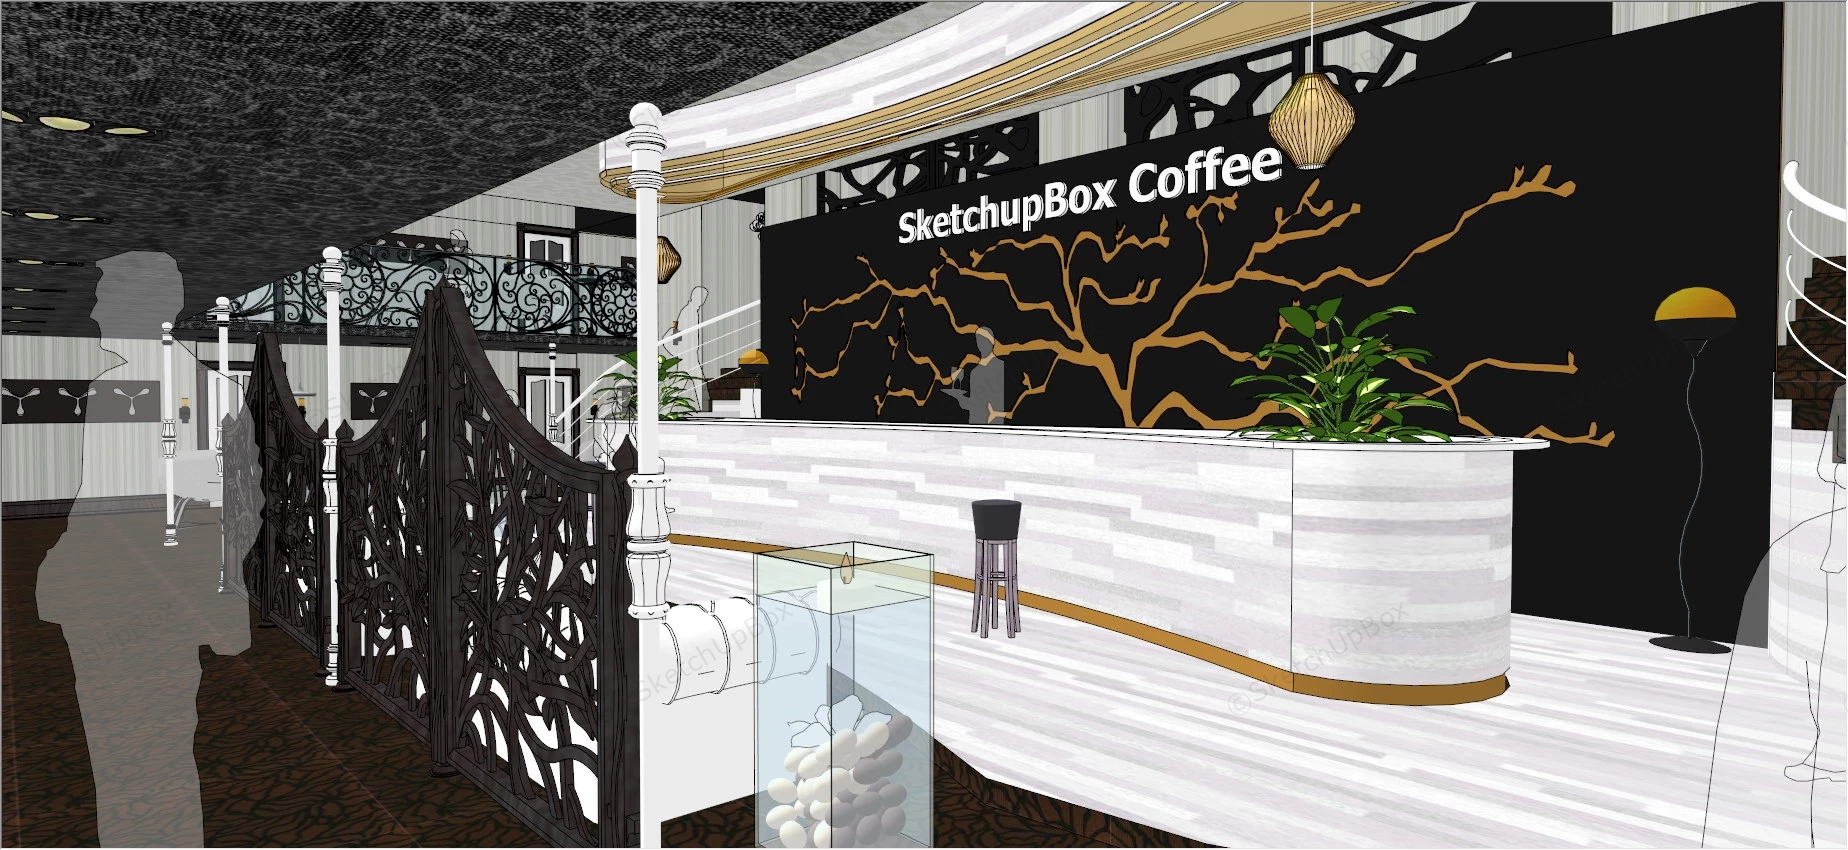 Coffee Bar Interior Design sketchup model preview - SketchupBox